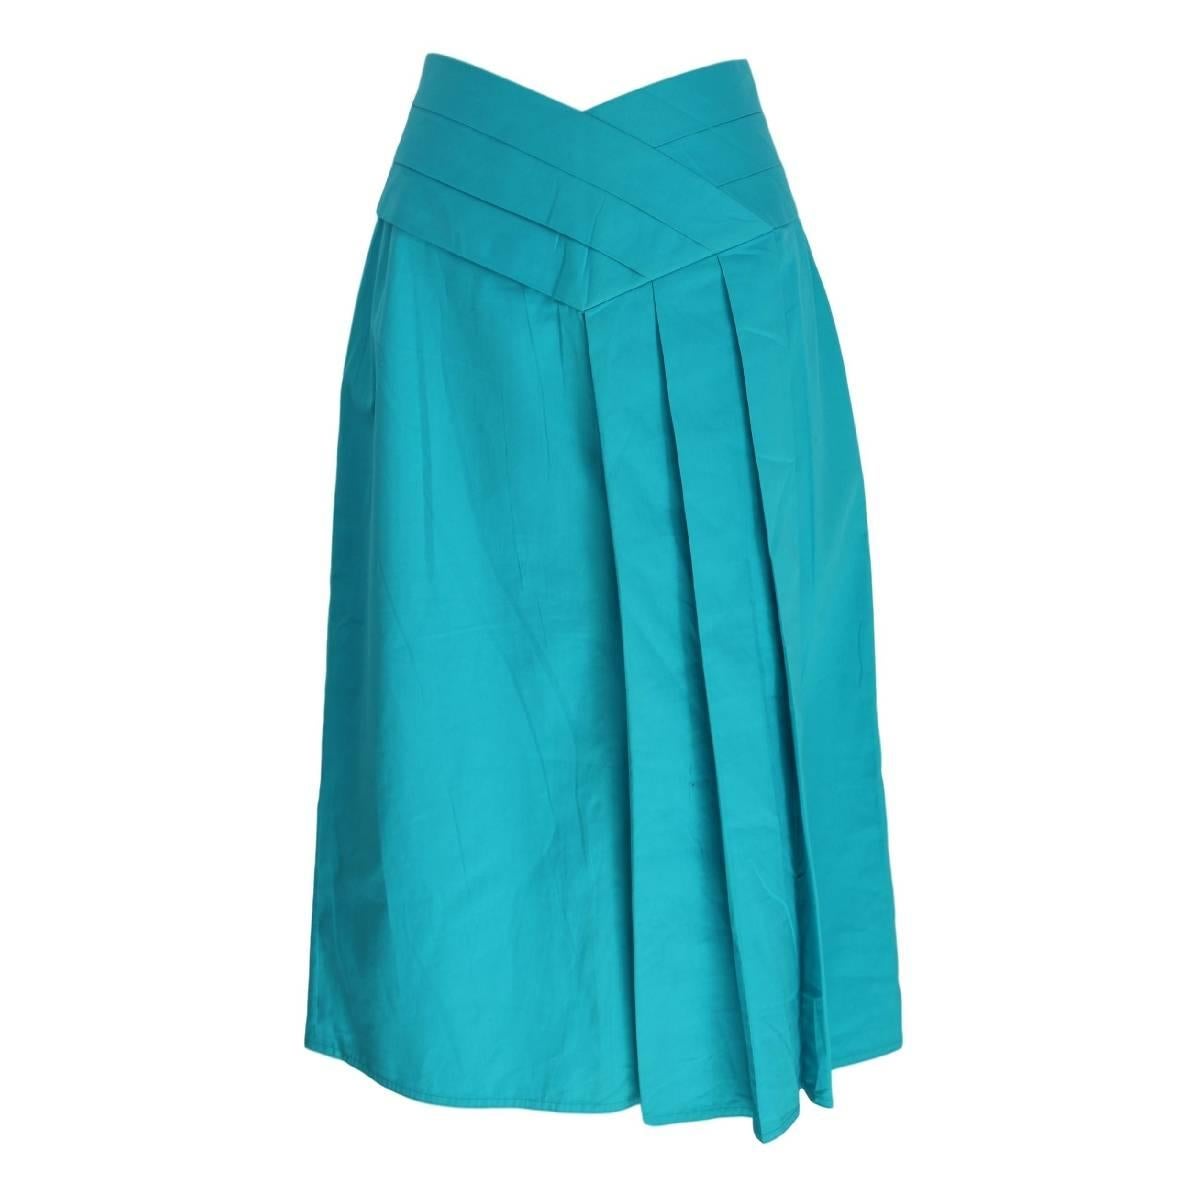 Alberta Ferretti vintage cotton light blue skirt size 46 it made italy